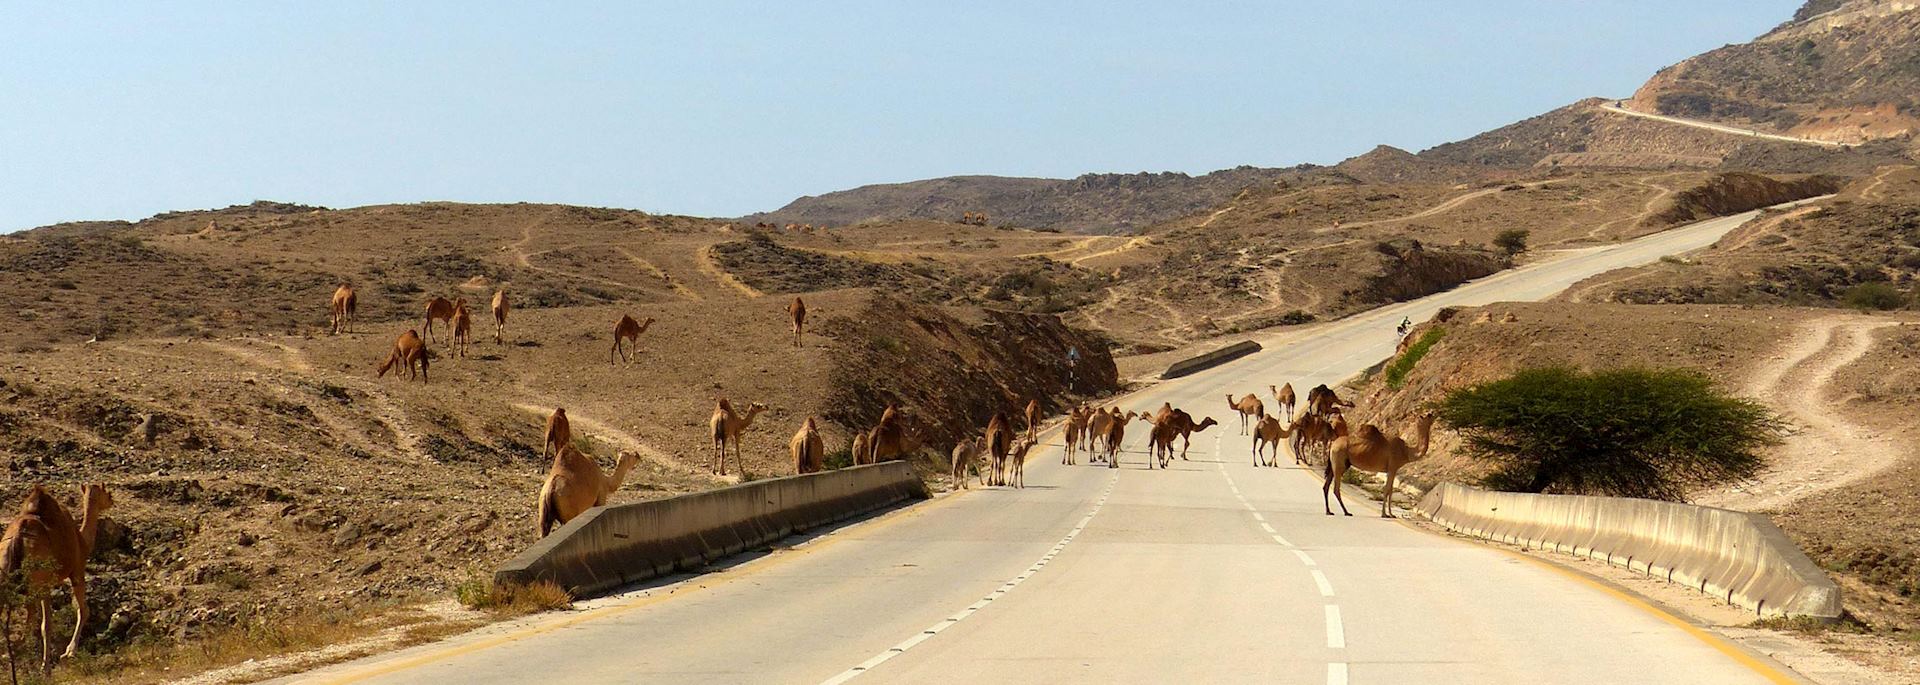 Camels in road in Dhofar, Oman